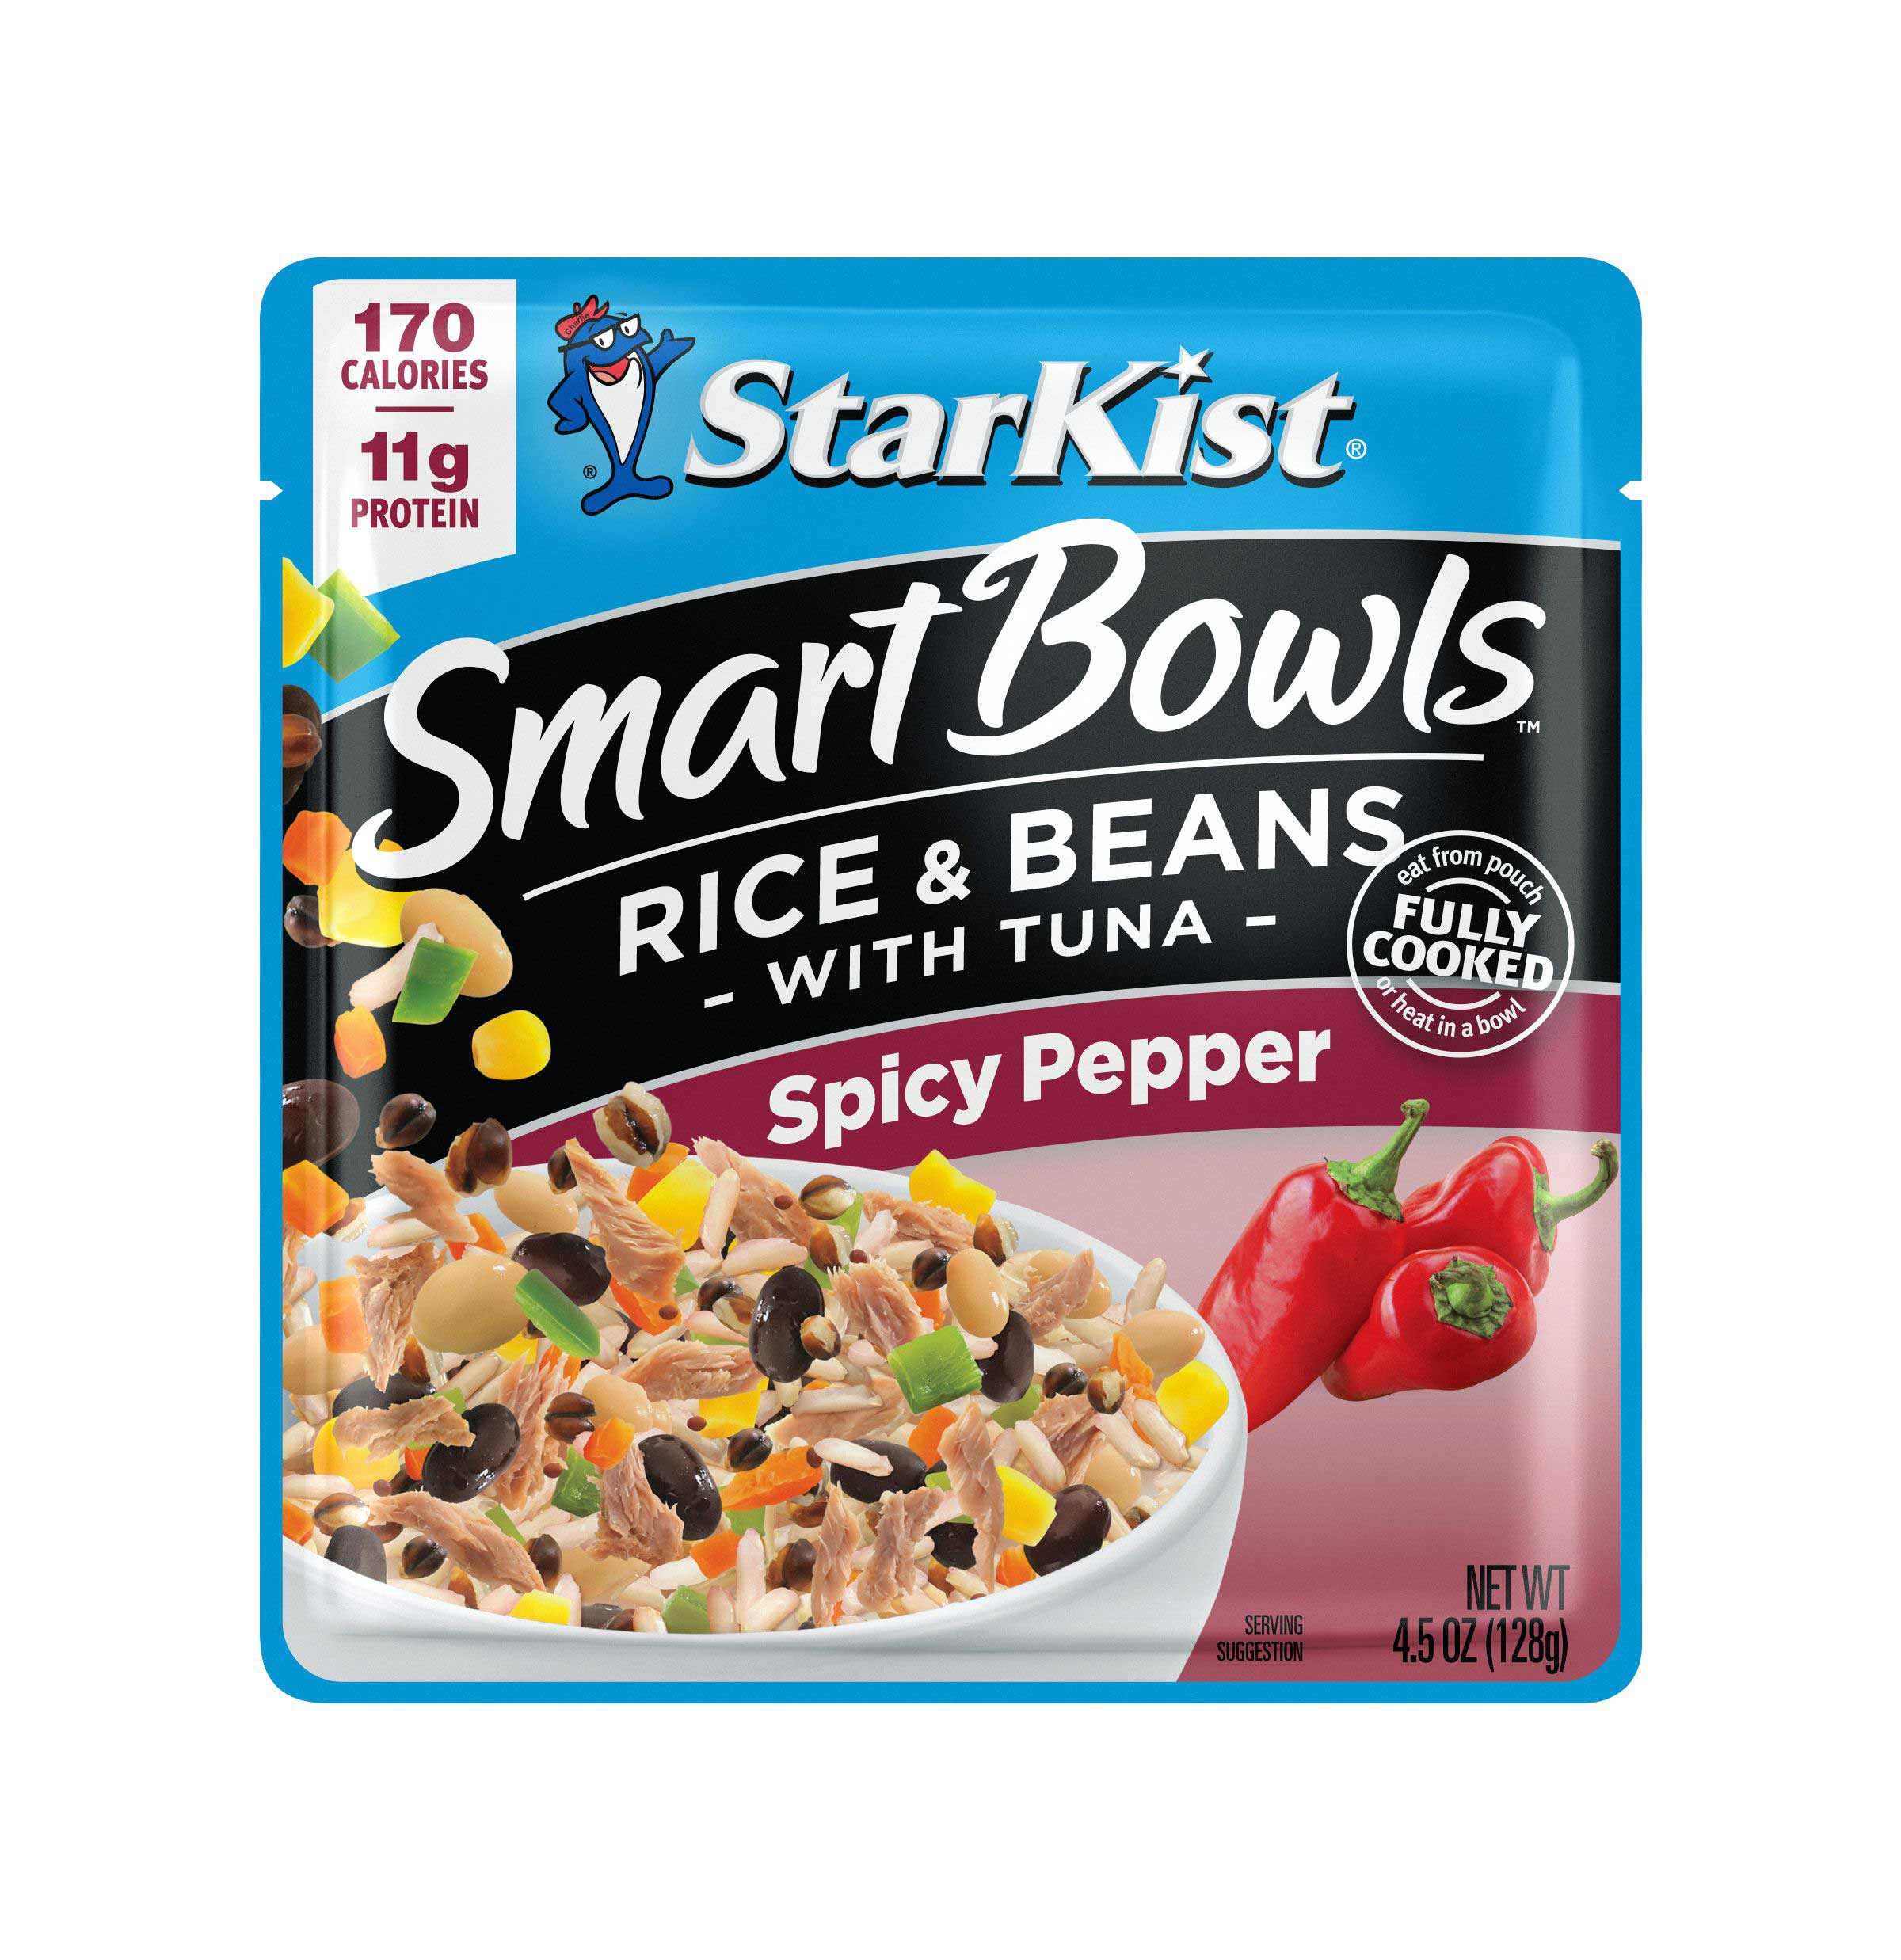 Starkist Smart Bowls Tuna - Rice & Beans Spicy Pepper, 4.5 Ounce -- 12 per case